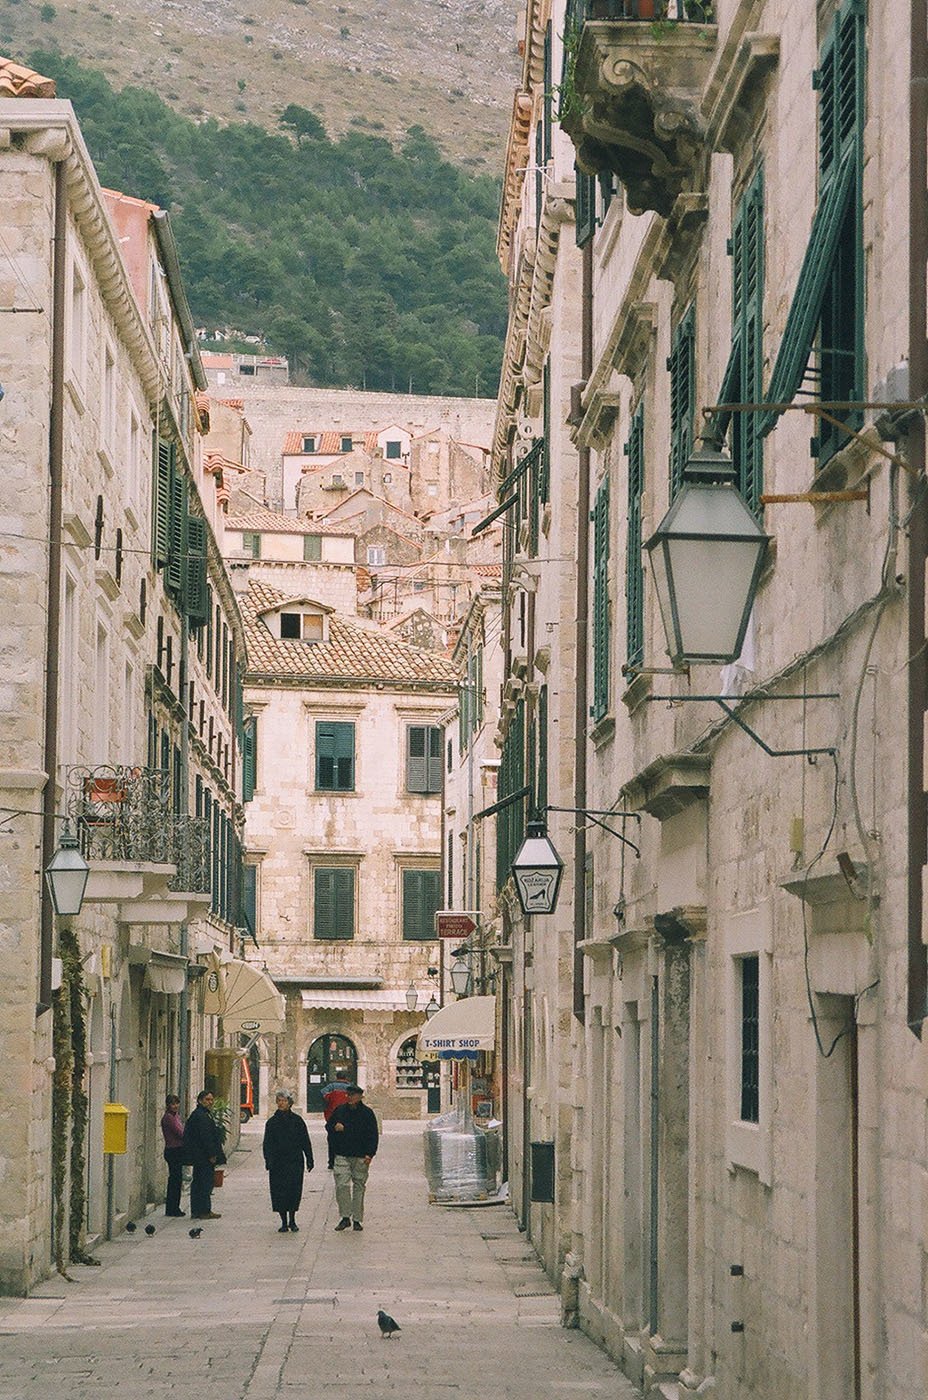 People walking along a street in the Old Town of Dubrovnik Croatia